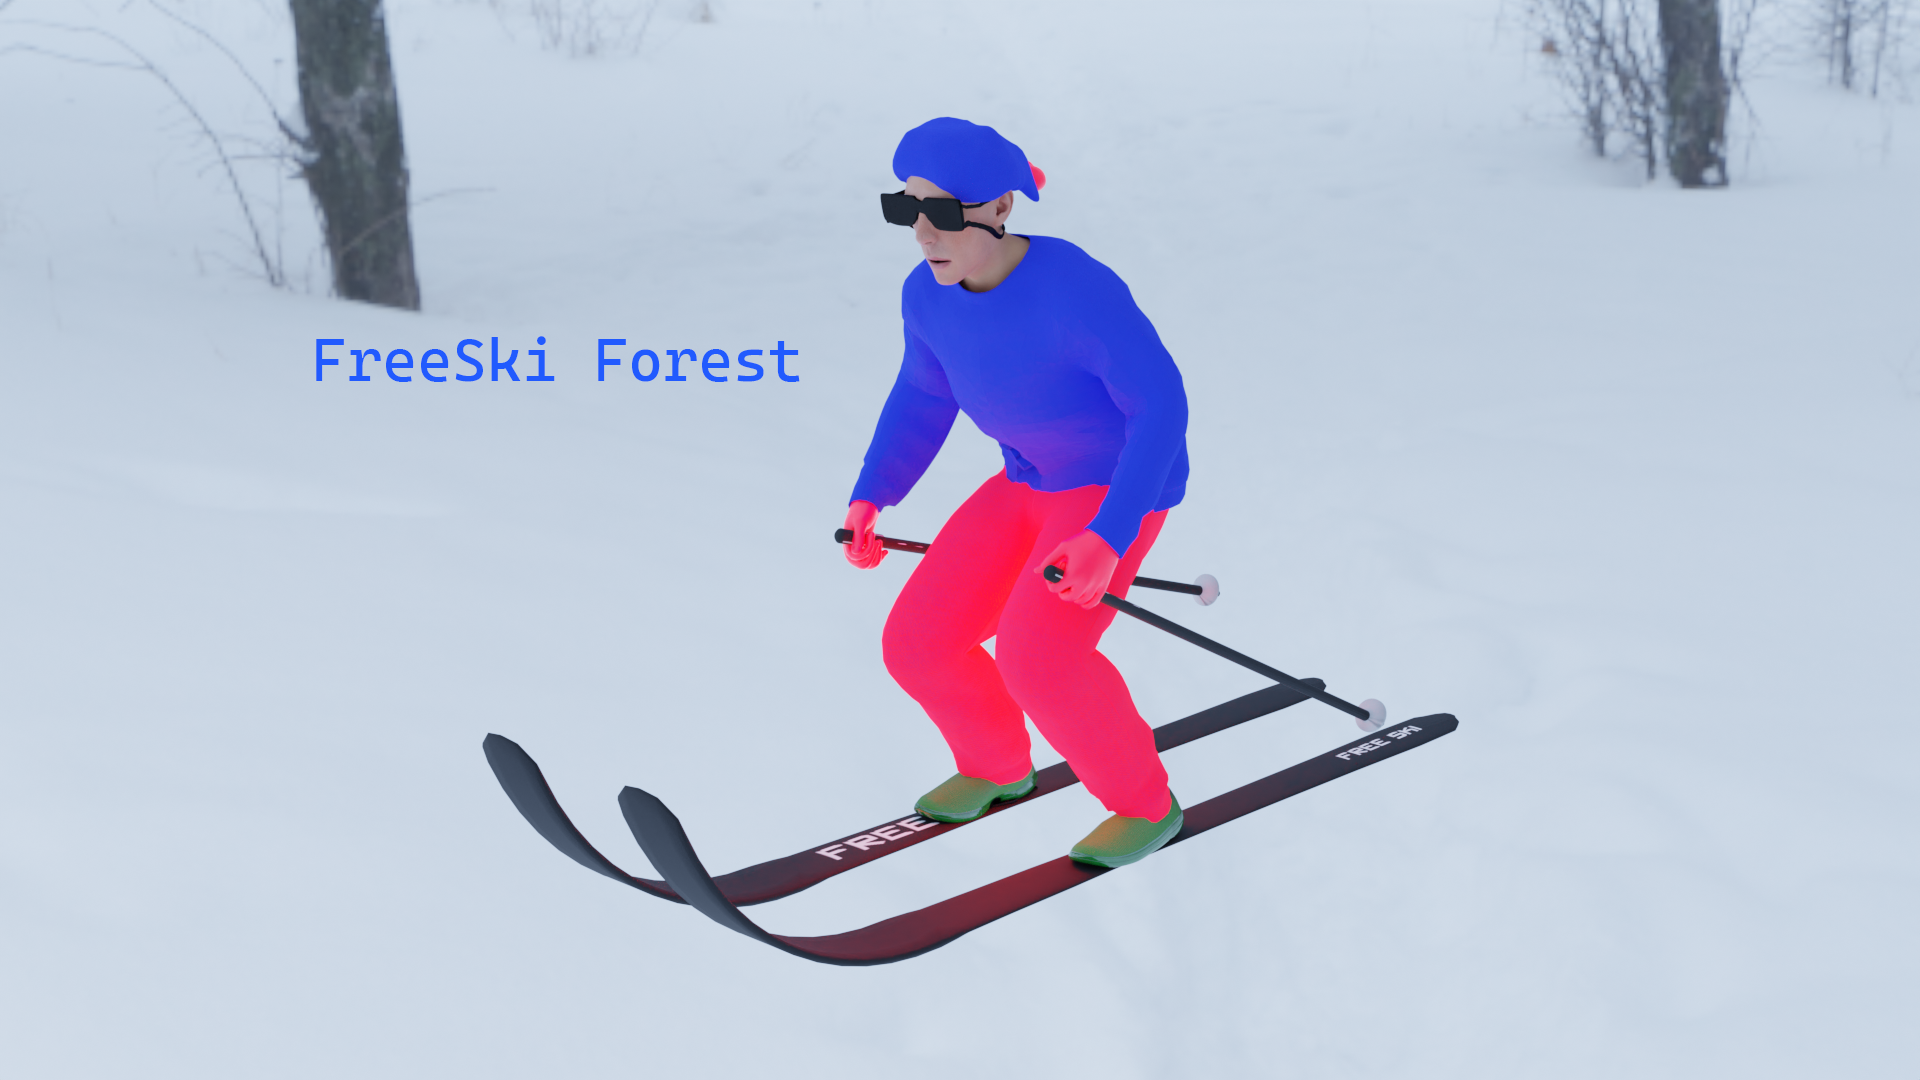 Free Ski Forest